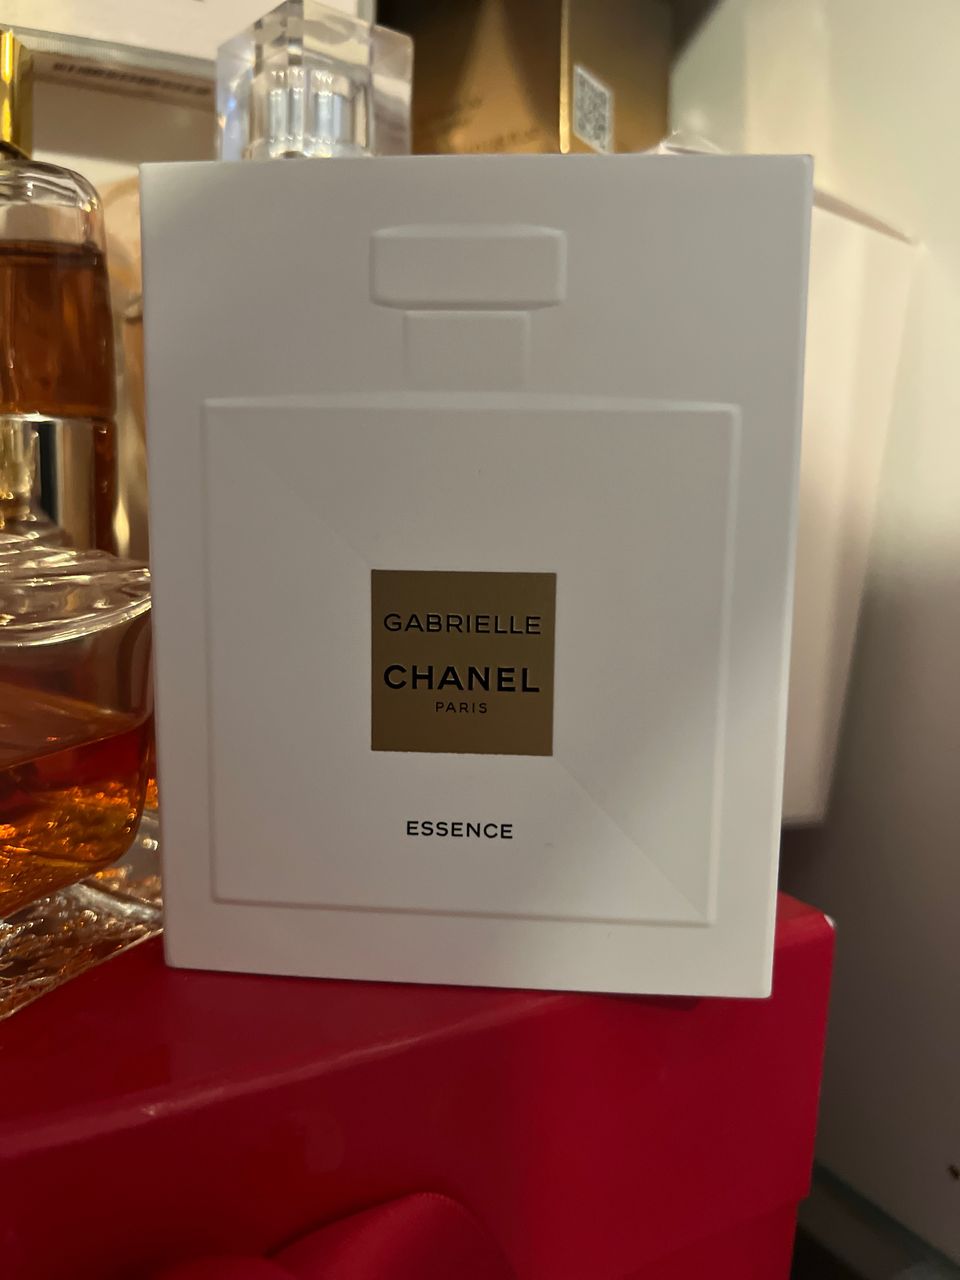 Chanel essence 50ml